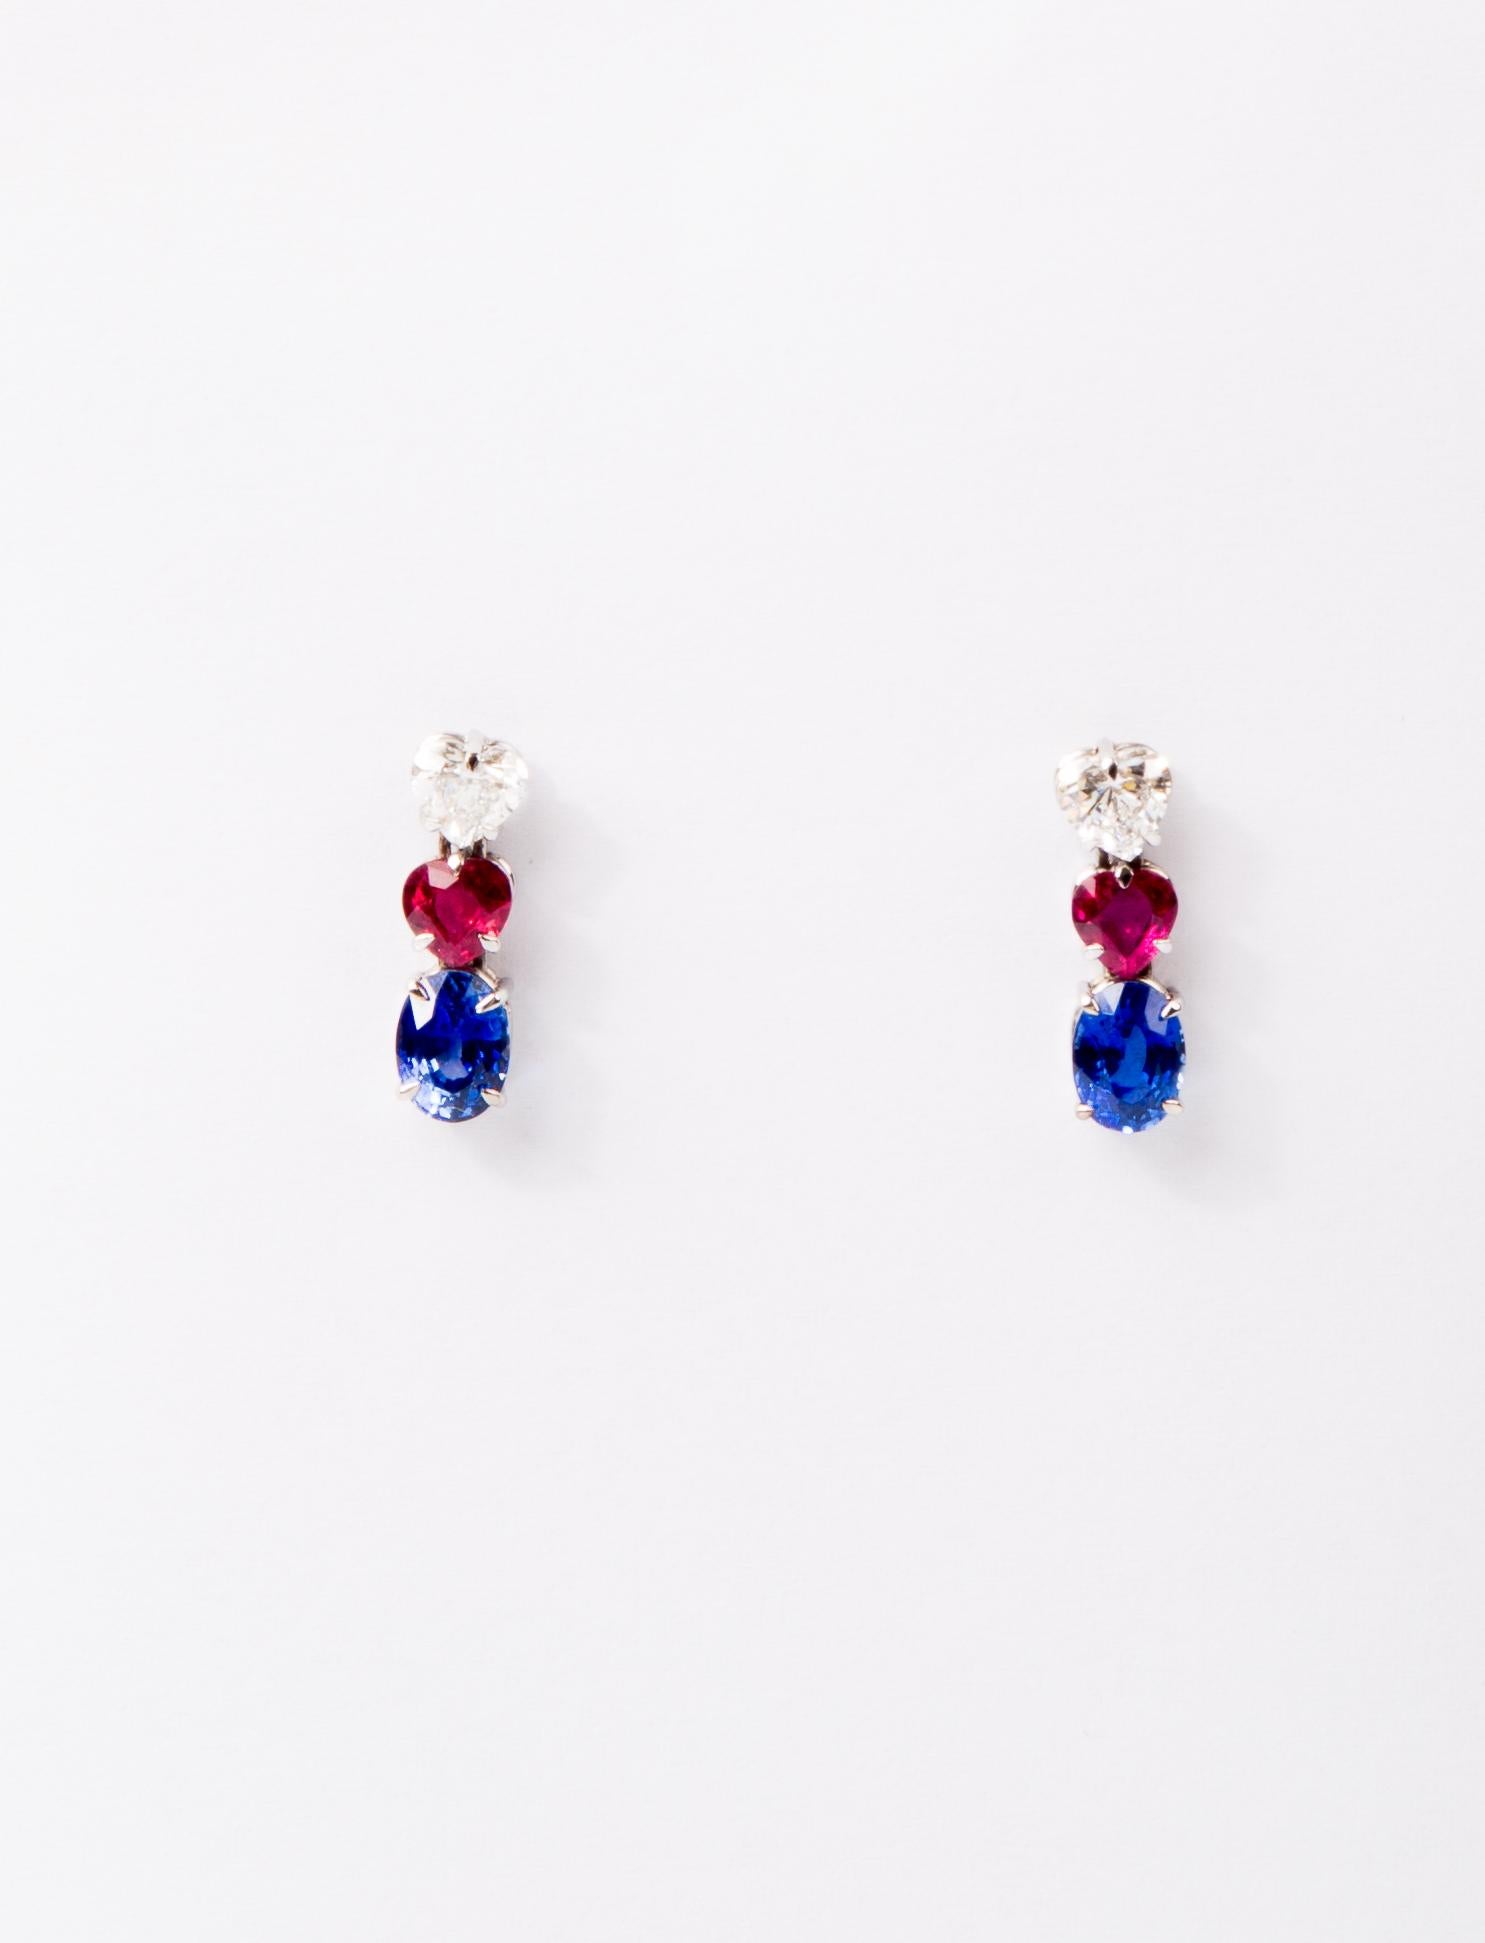 Diamond pair heart shaped 1.86 ct vis,
Sapphire pair blue oval 2.7 ct
Ruby pair heart shaped 1.01 ct